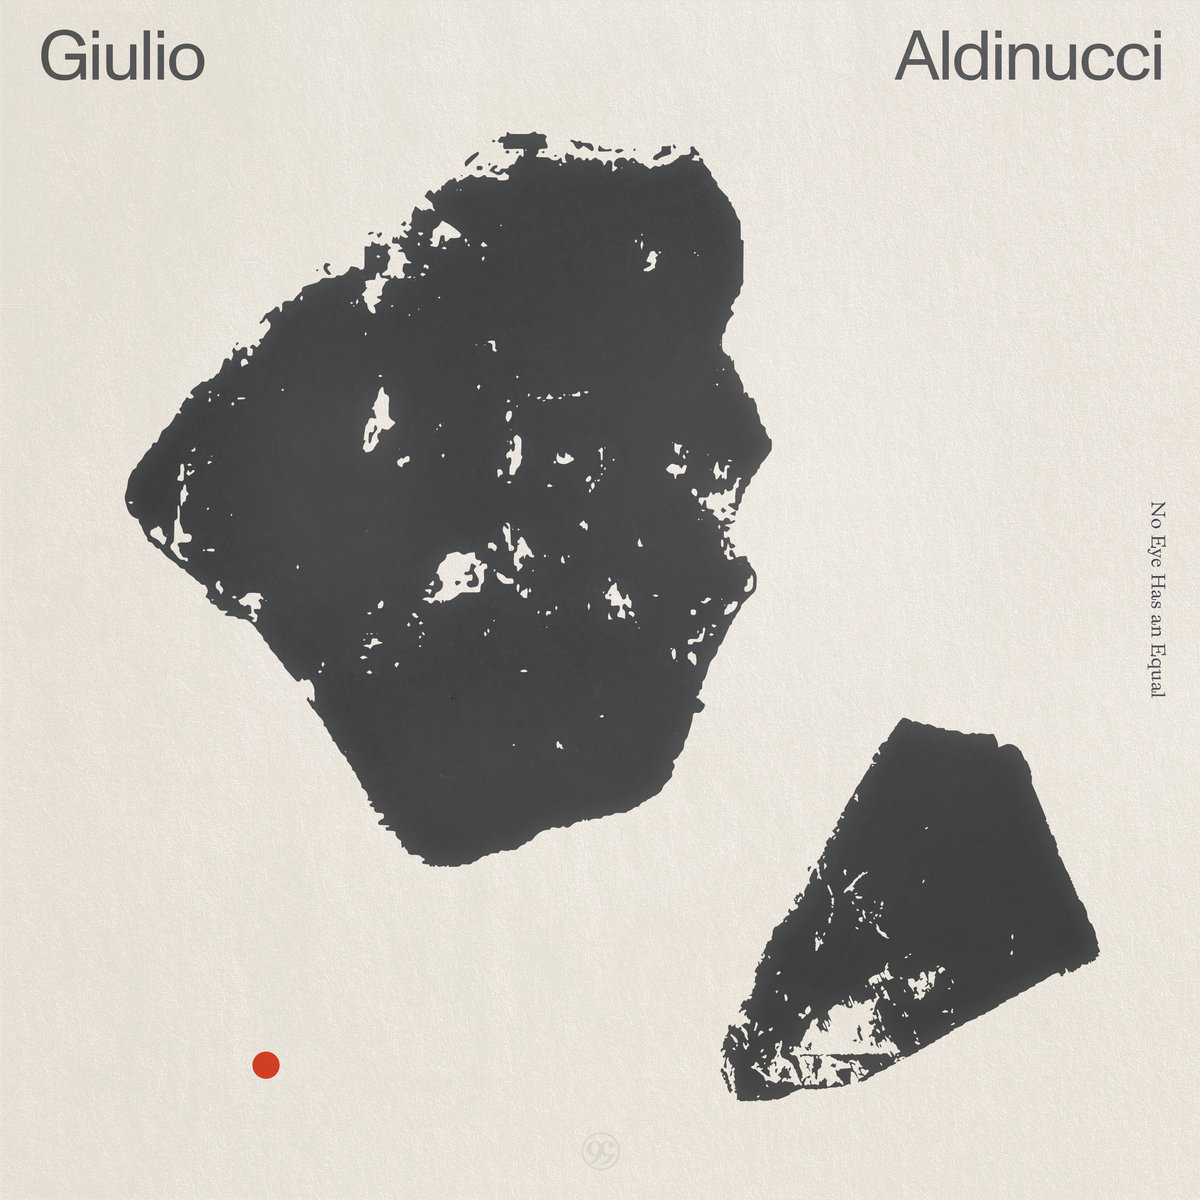 Giulio Aldinucci No Eye Has an Equal album cover